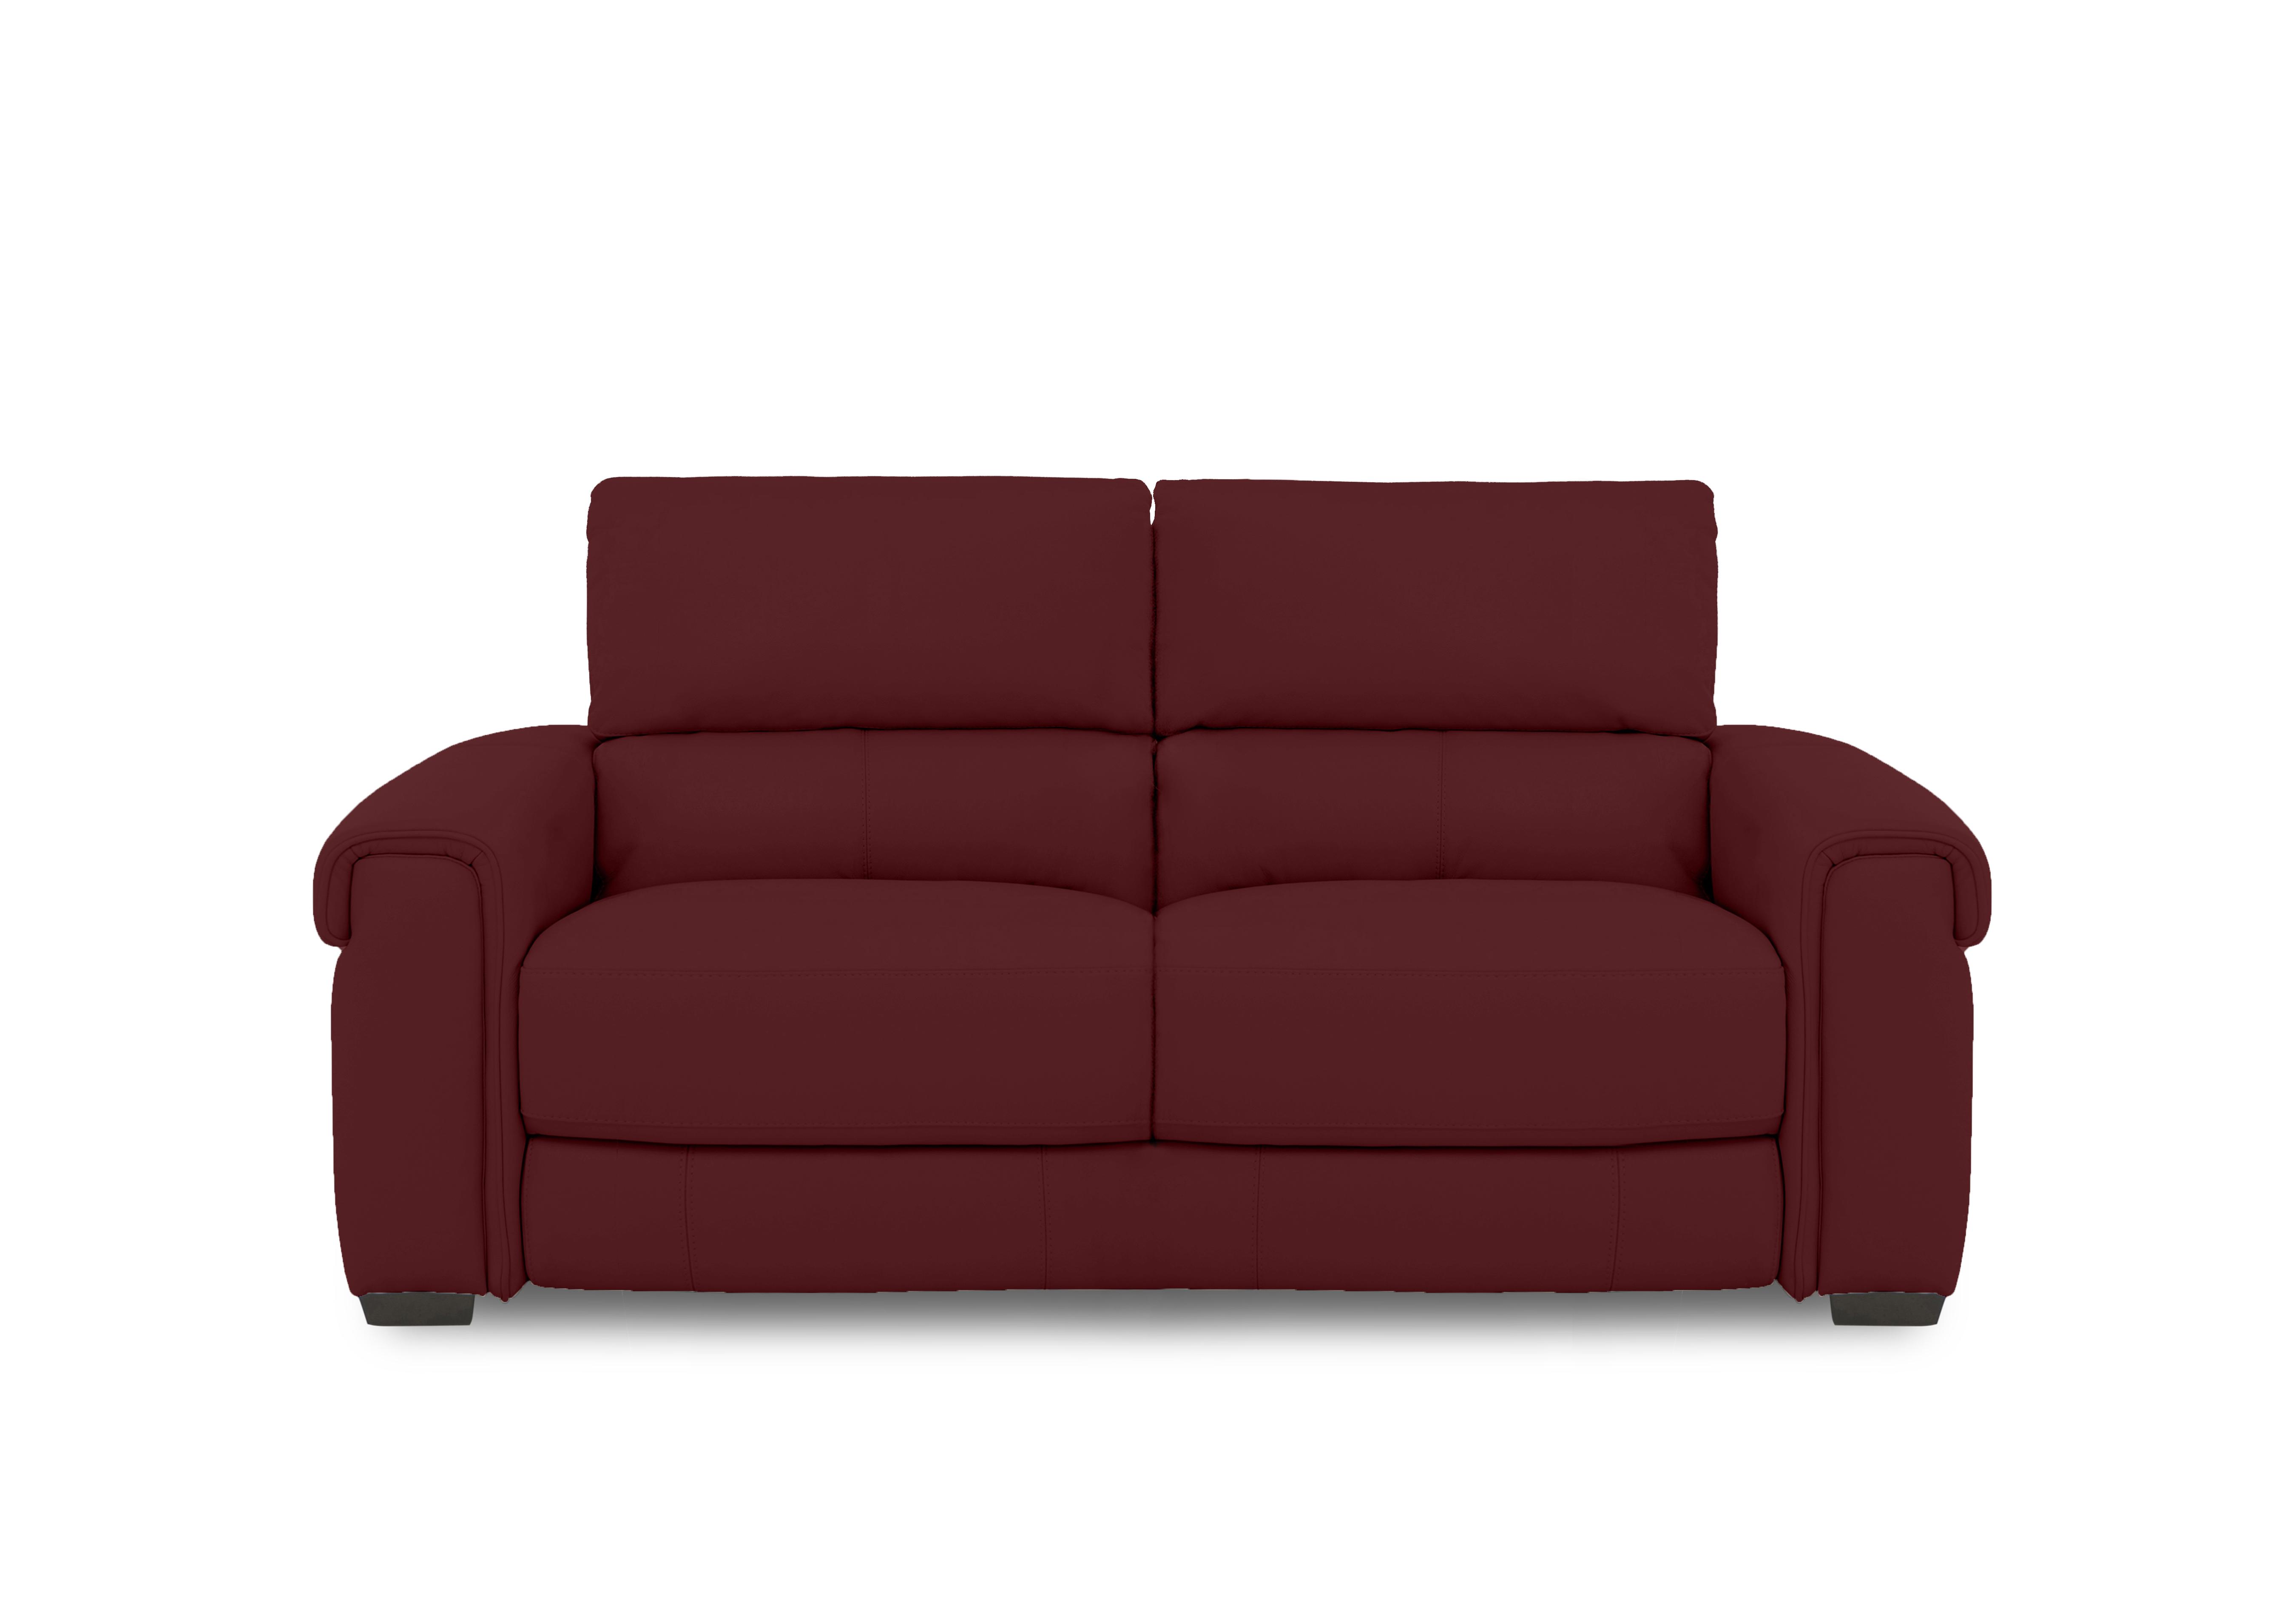 Nixon Fabric 3 Seater Sofa in Fab-Meg-R65 Burgundy on Furniture Village